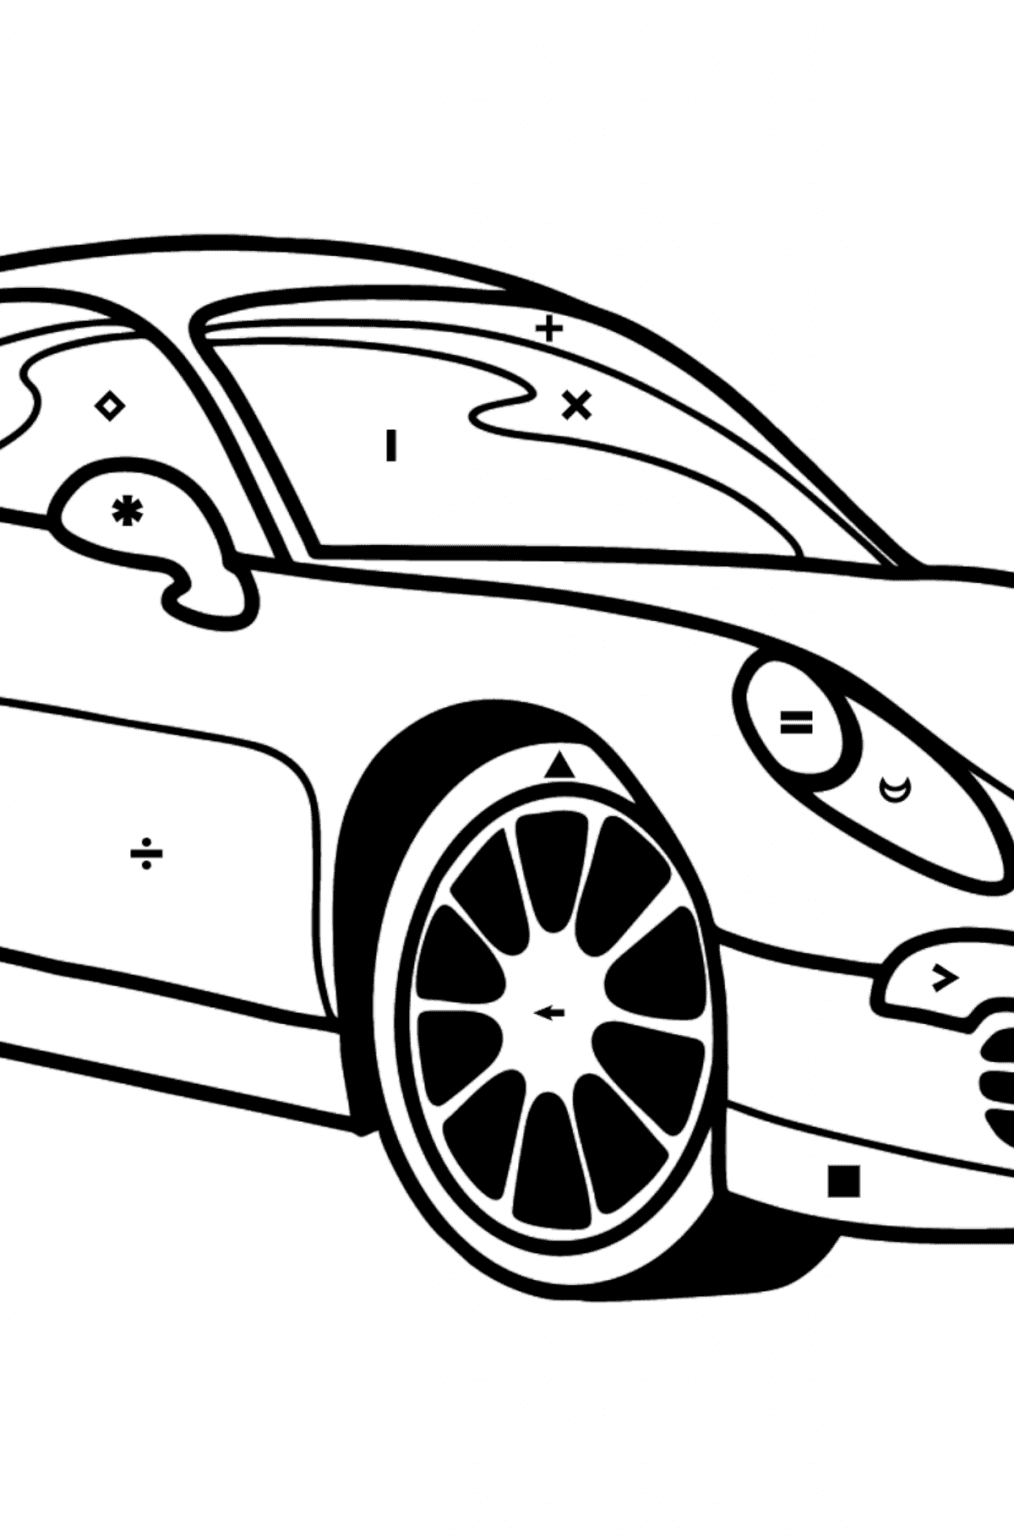 Porsche Cayman Sports Car coloring page - Print, and Color Online!